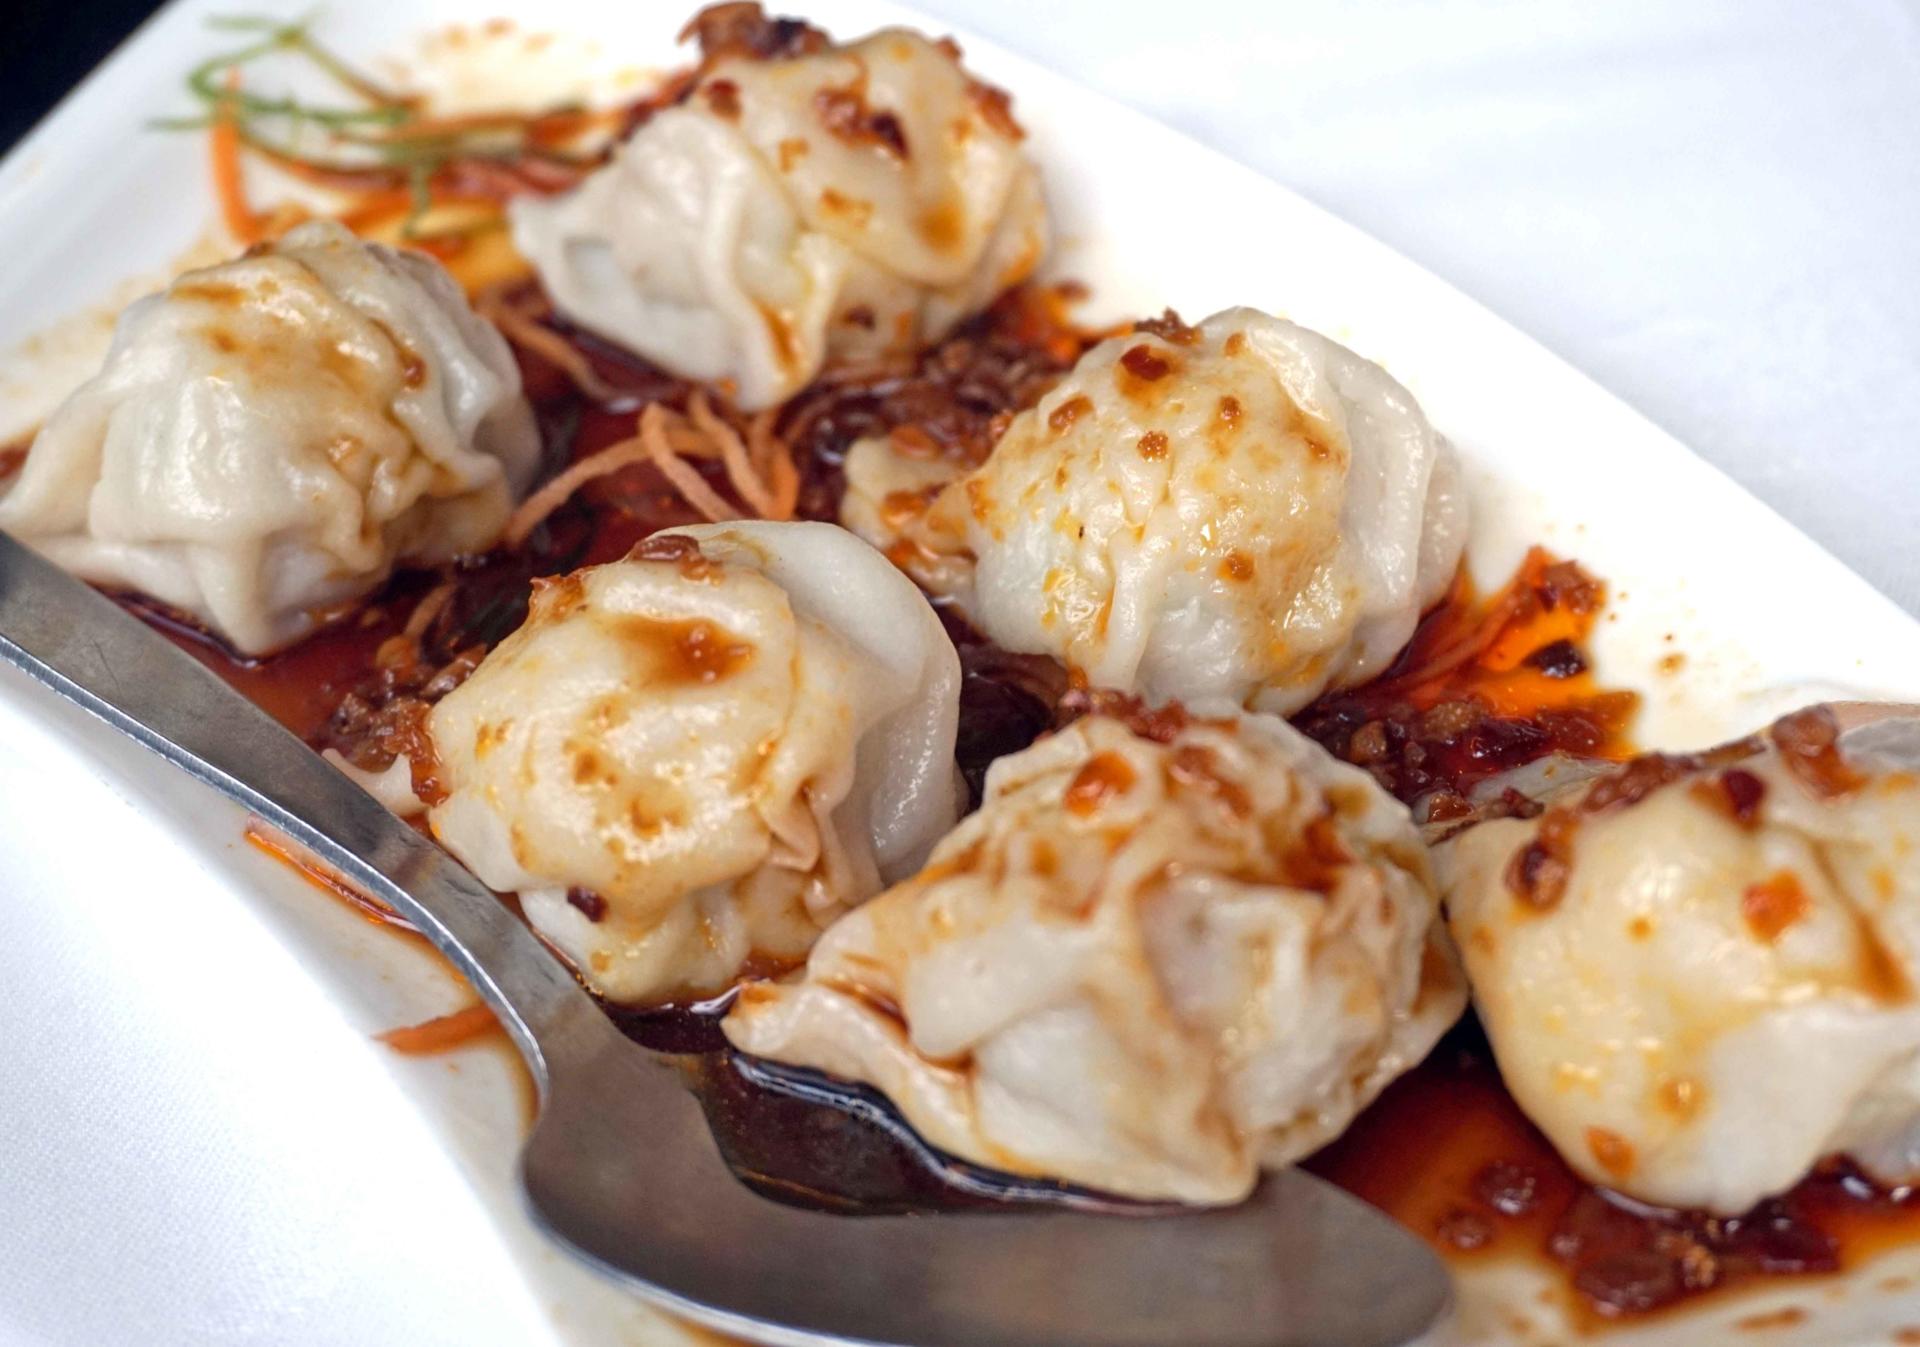 Royal China Restaurant Review: Perfect Dim Sum and Chinese Classics at Royal China in Fulham